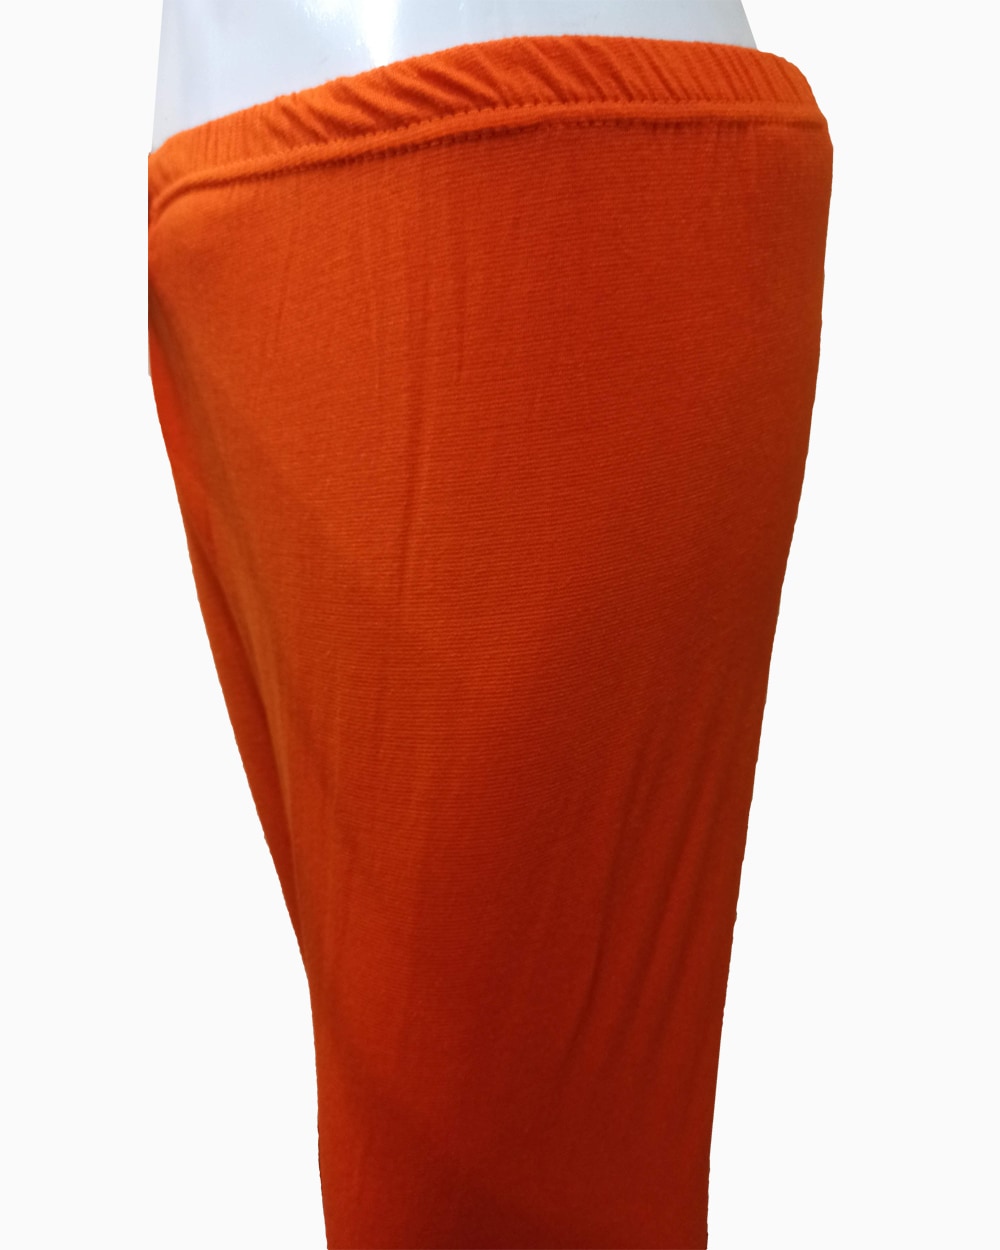 slim fit orange tights close up